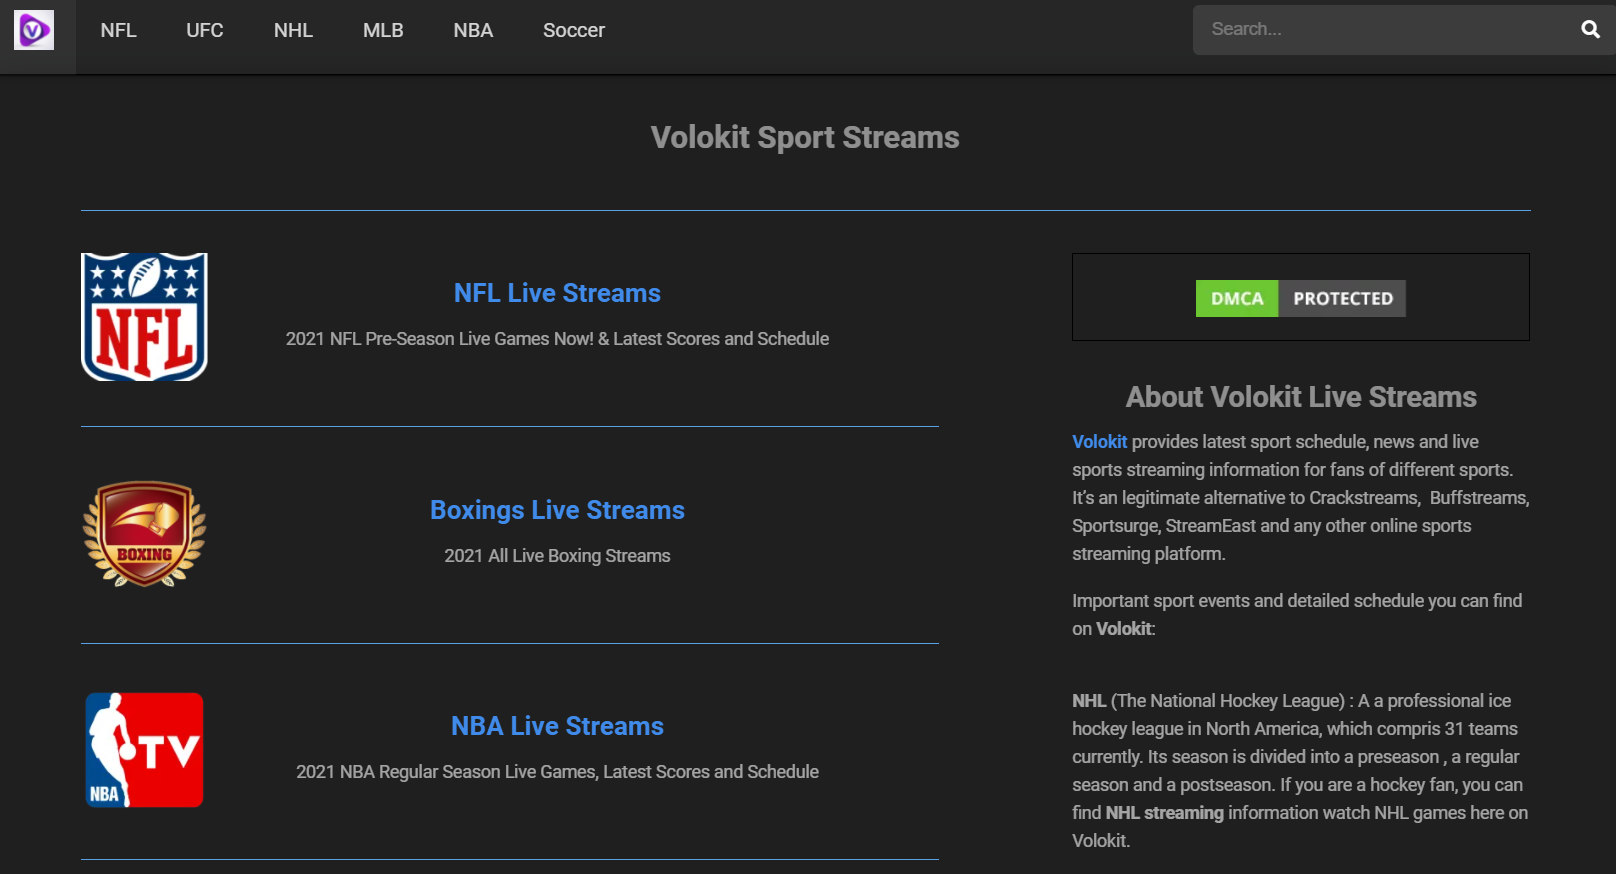 Volokit-sport-stream-page-interface